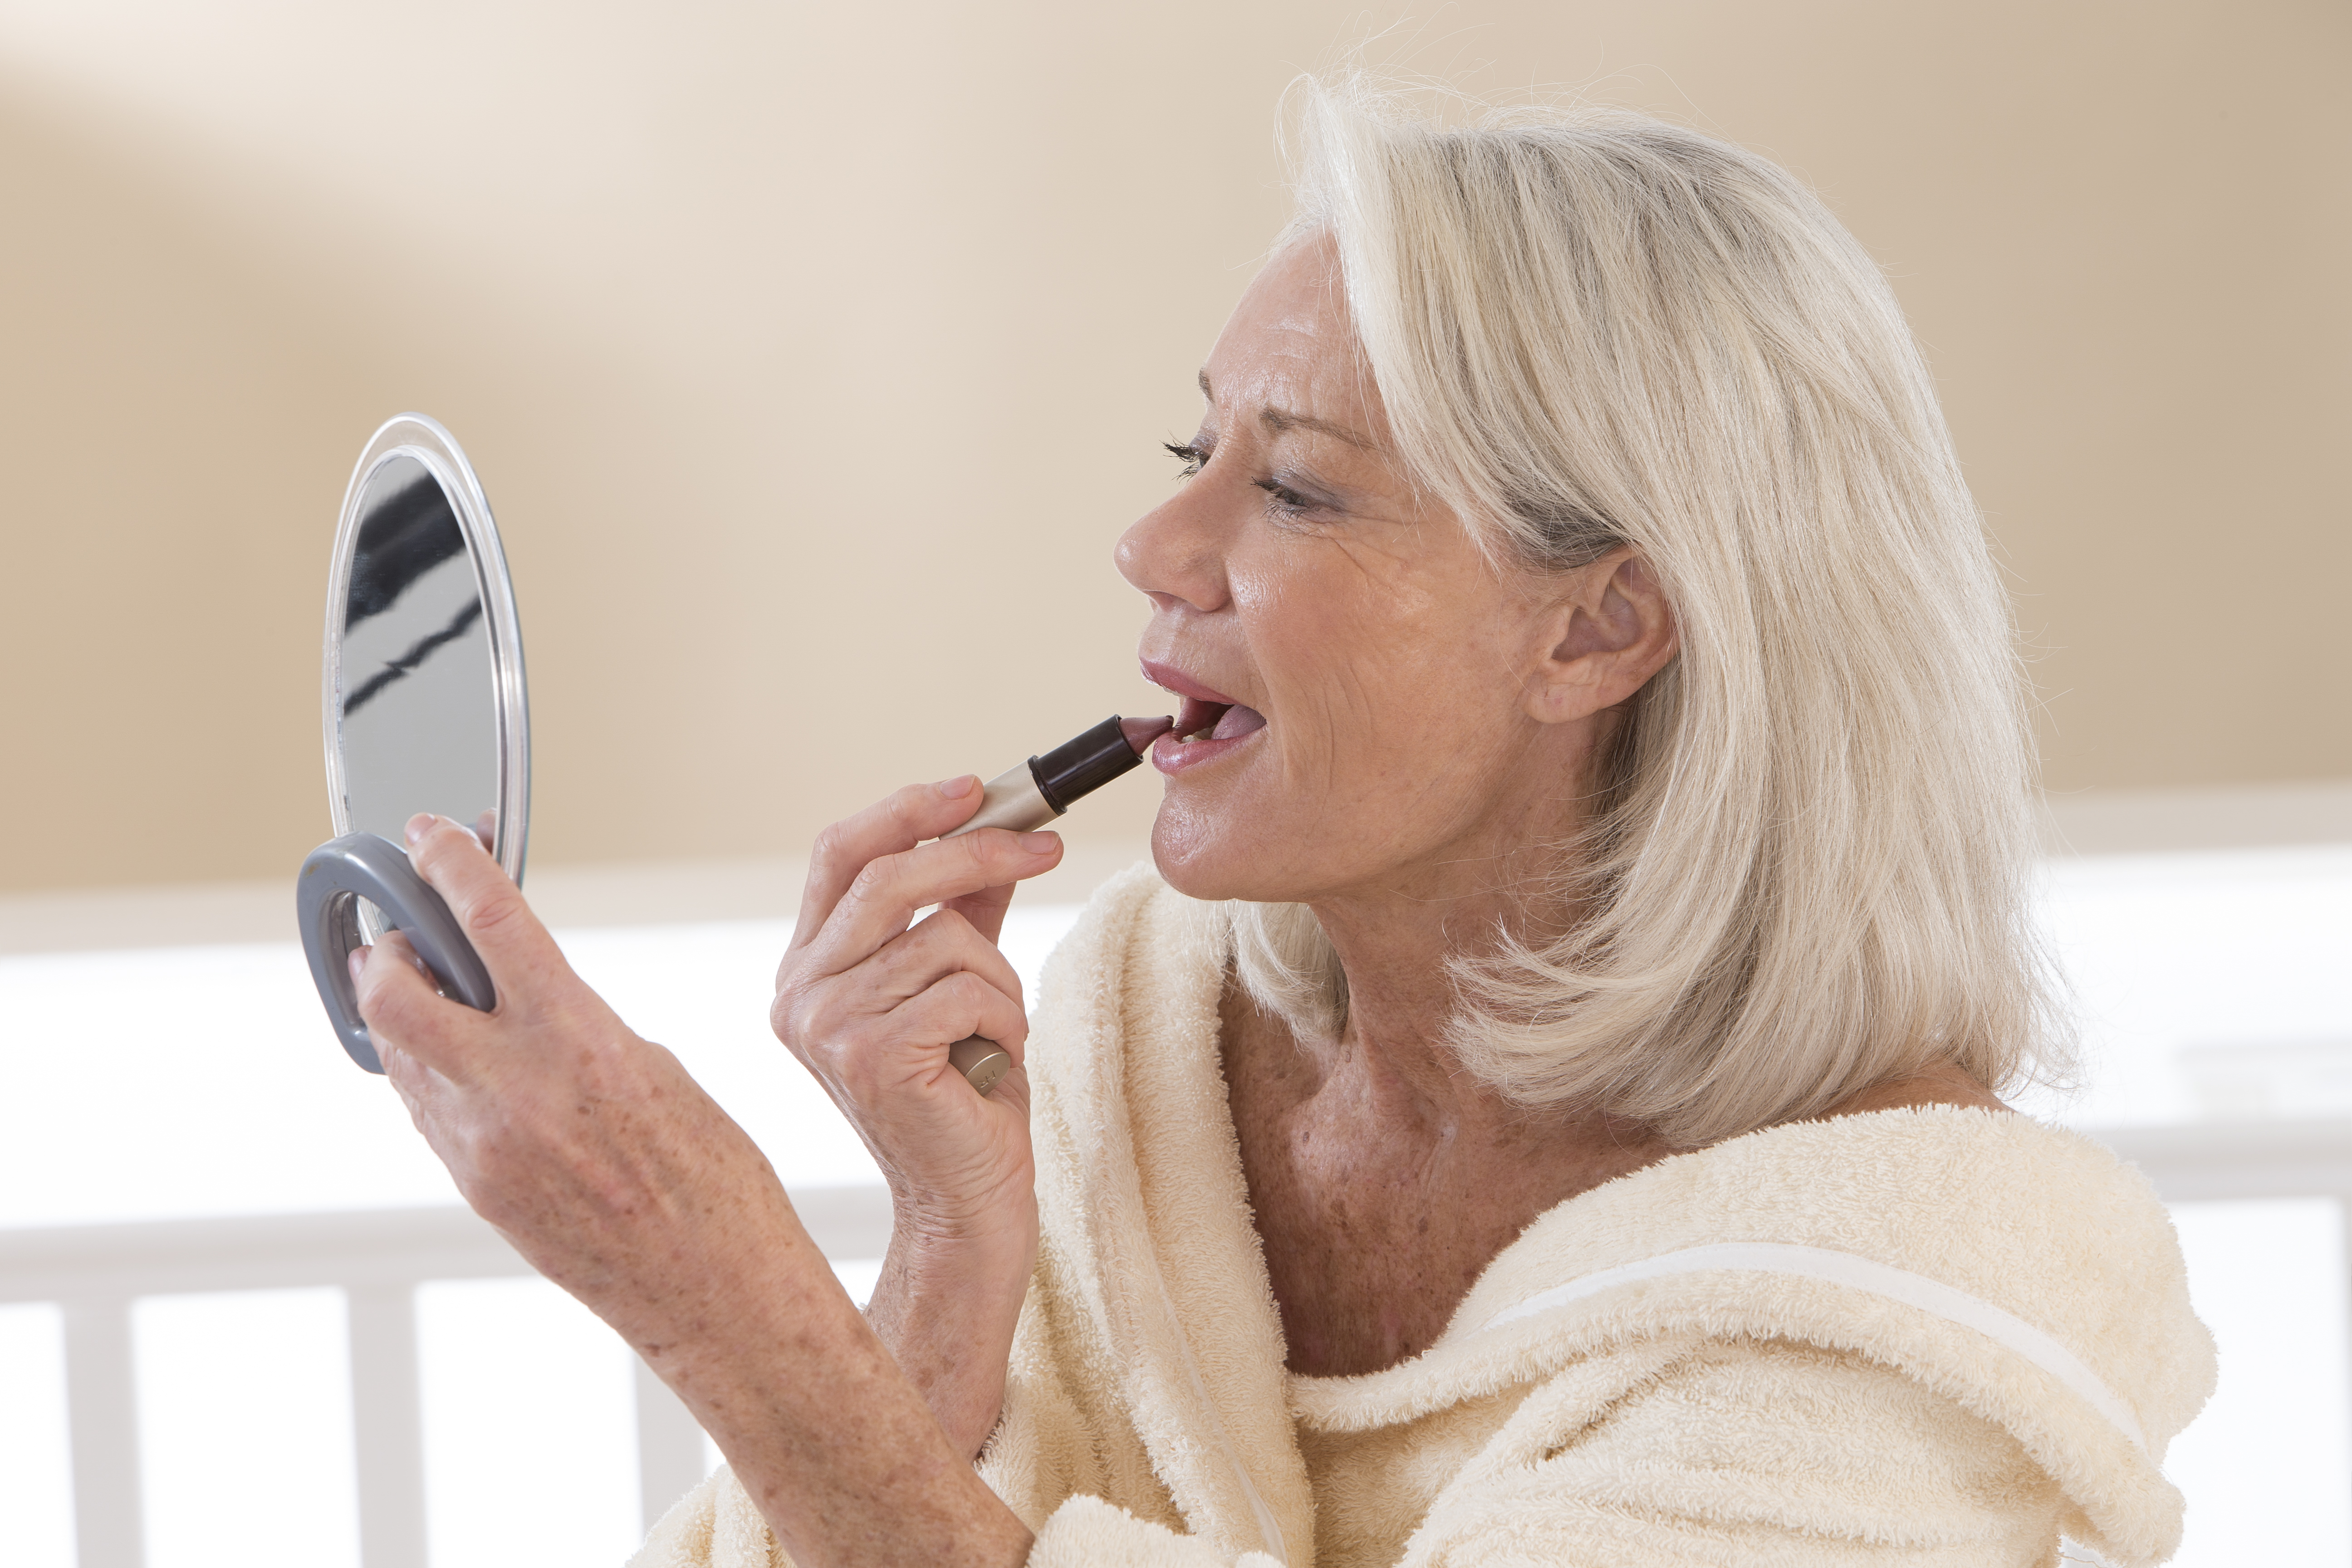 A senior woman applying lipstick | Source: Shutterstock